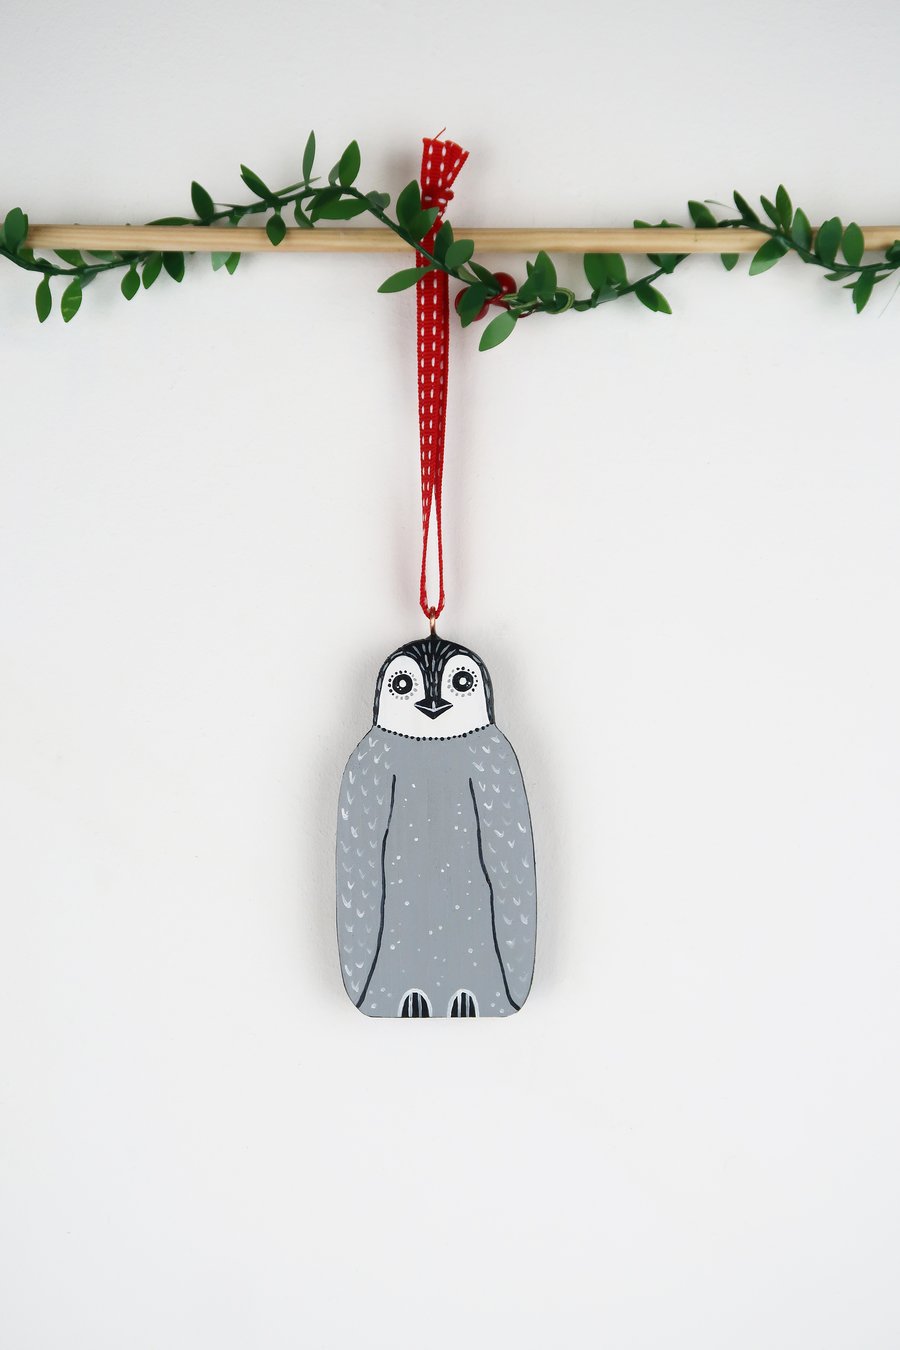 Penguin hanging decoration, cute animal ornament